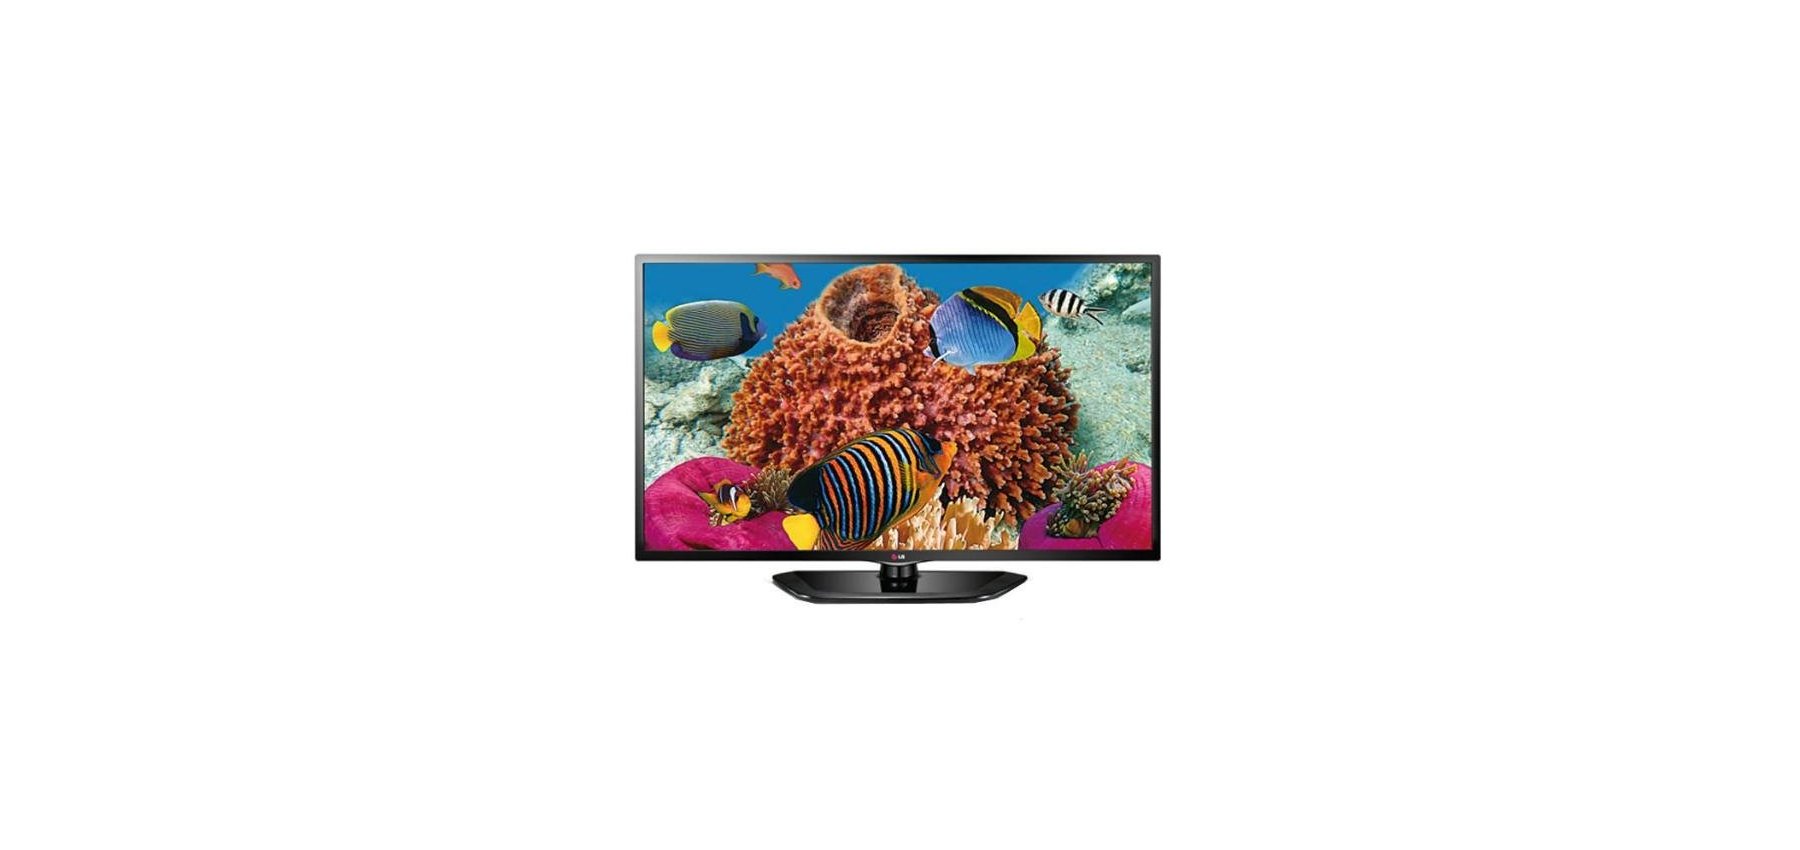 Telewizor LG 39LN5400/39CALI/SMART TV/Full HD 1920 x 1080